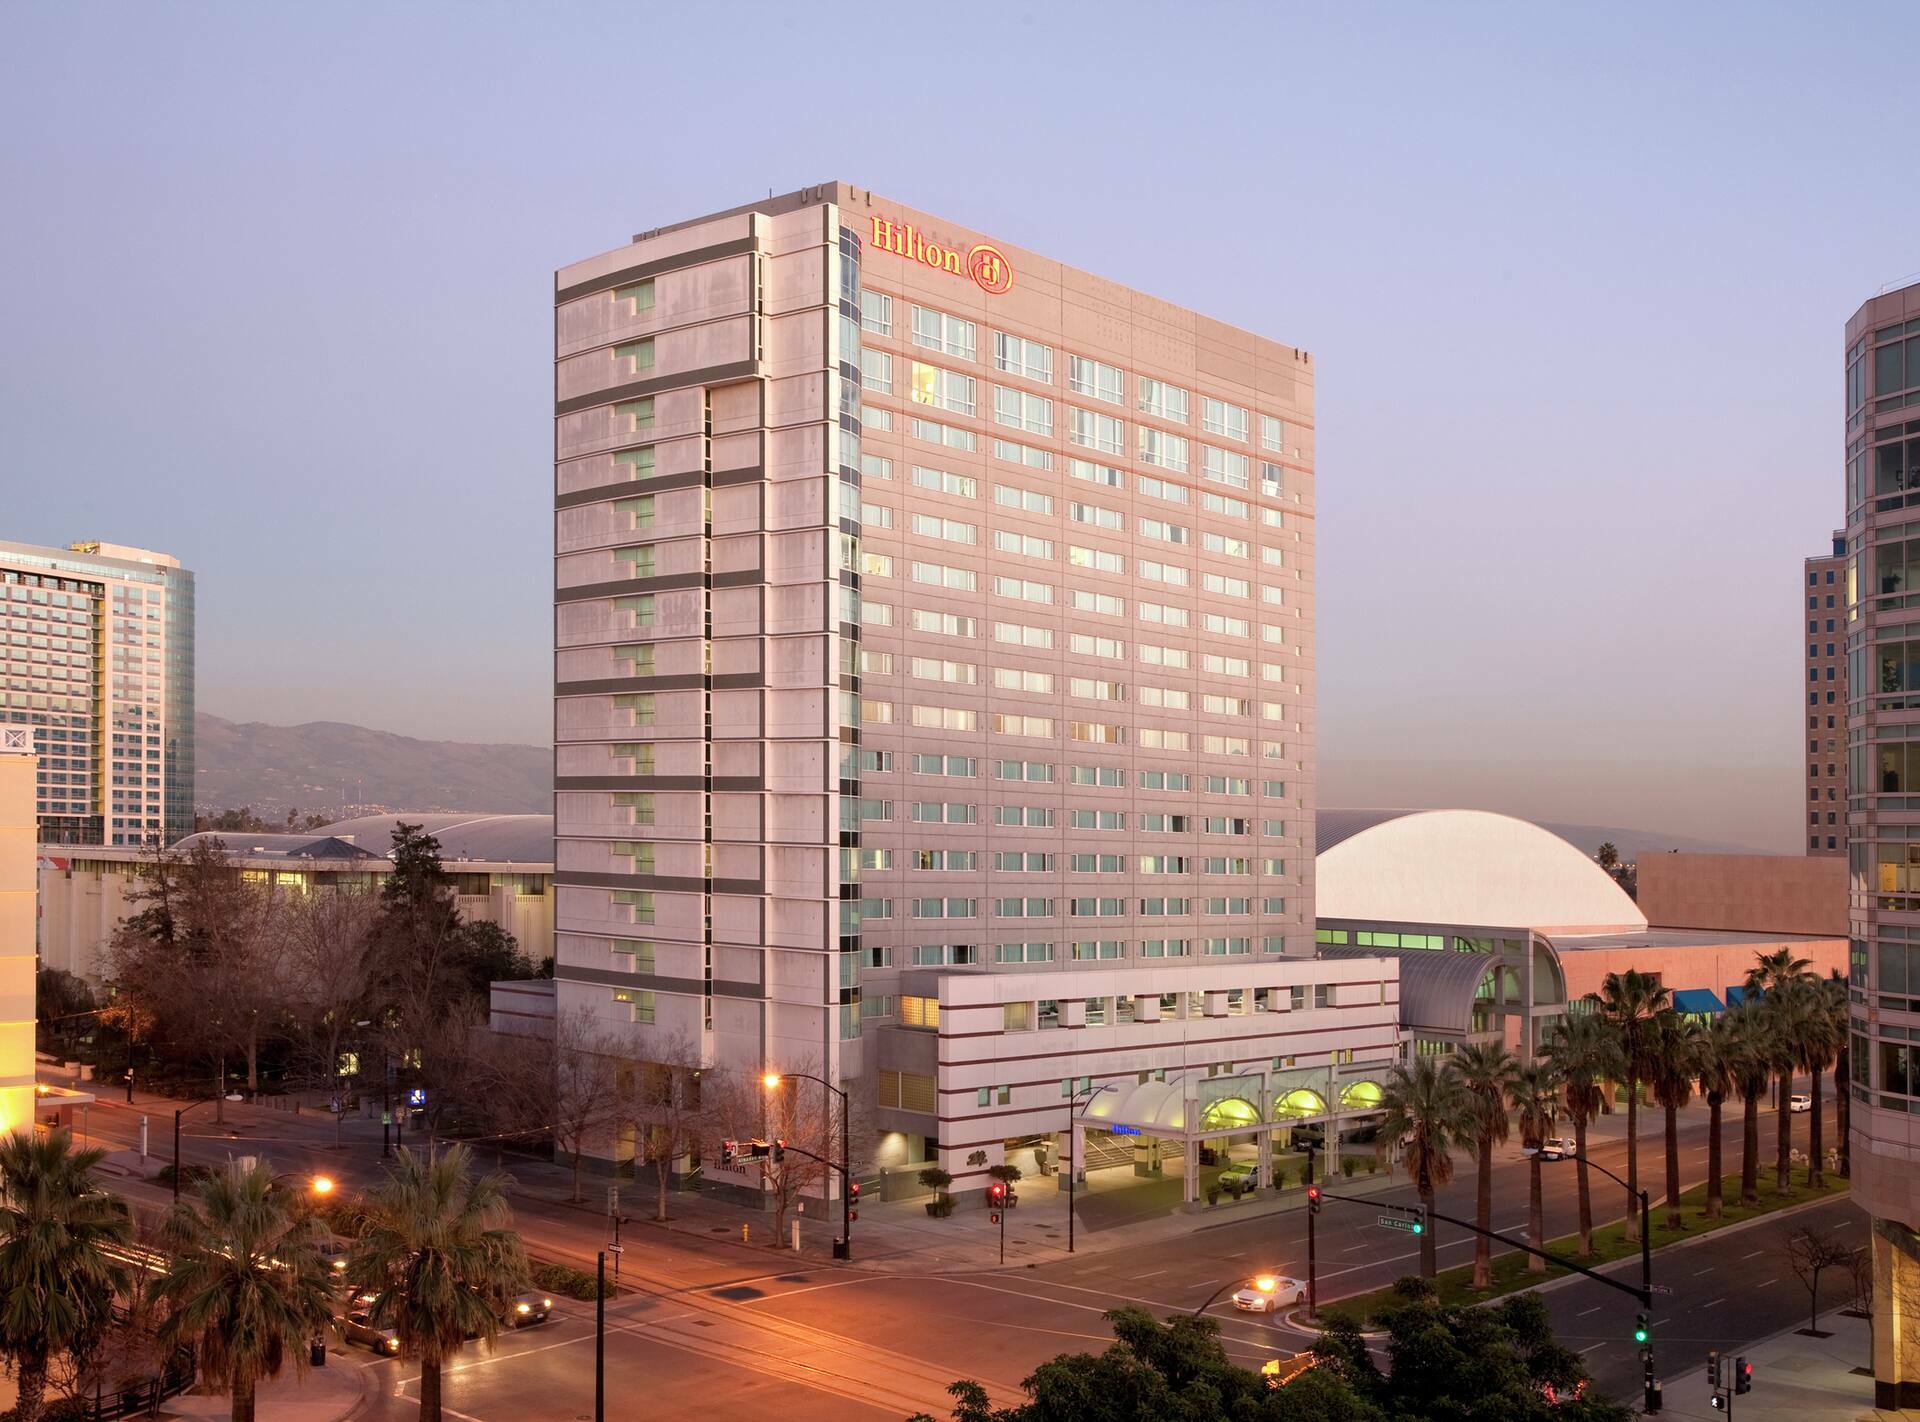 Photo of Hilton San Jose, San Jose, CA